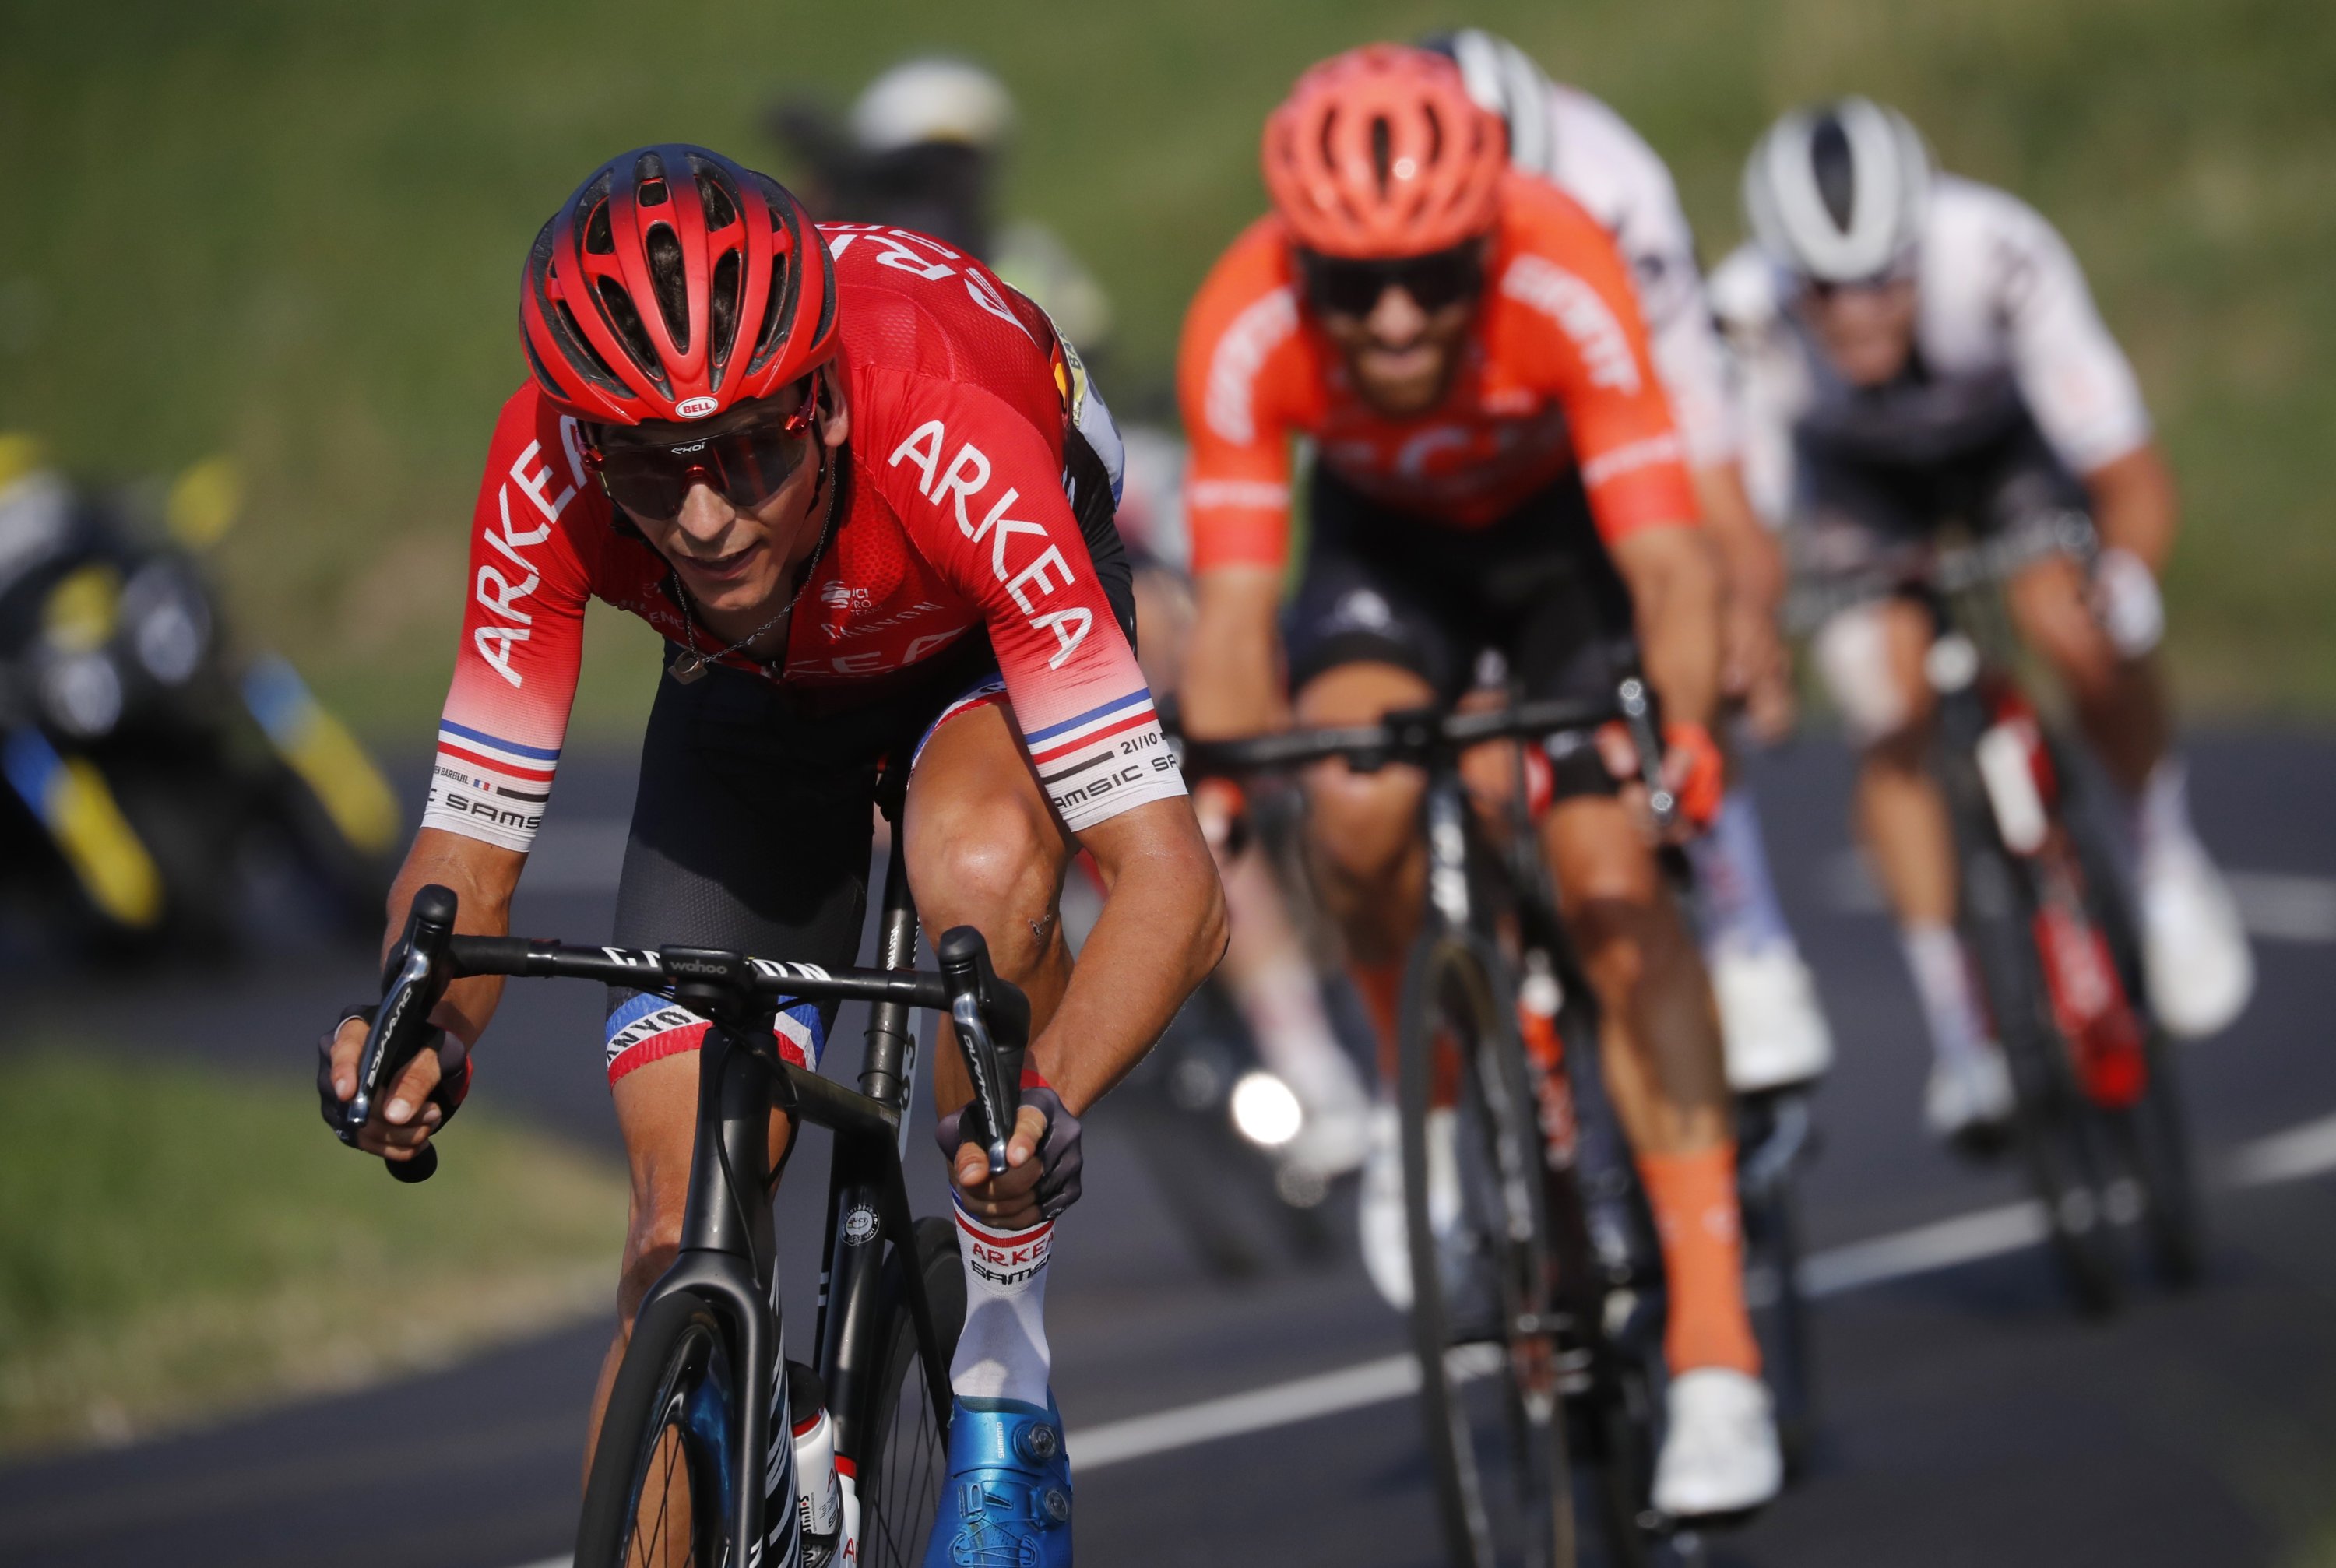 Cycling thrown into fresh turmoil with Tour de France doping ...